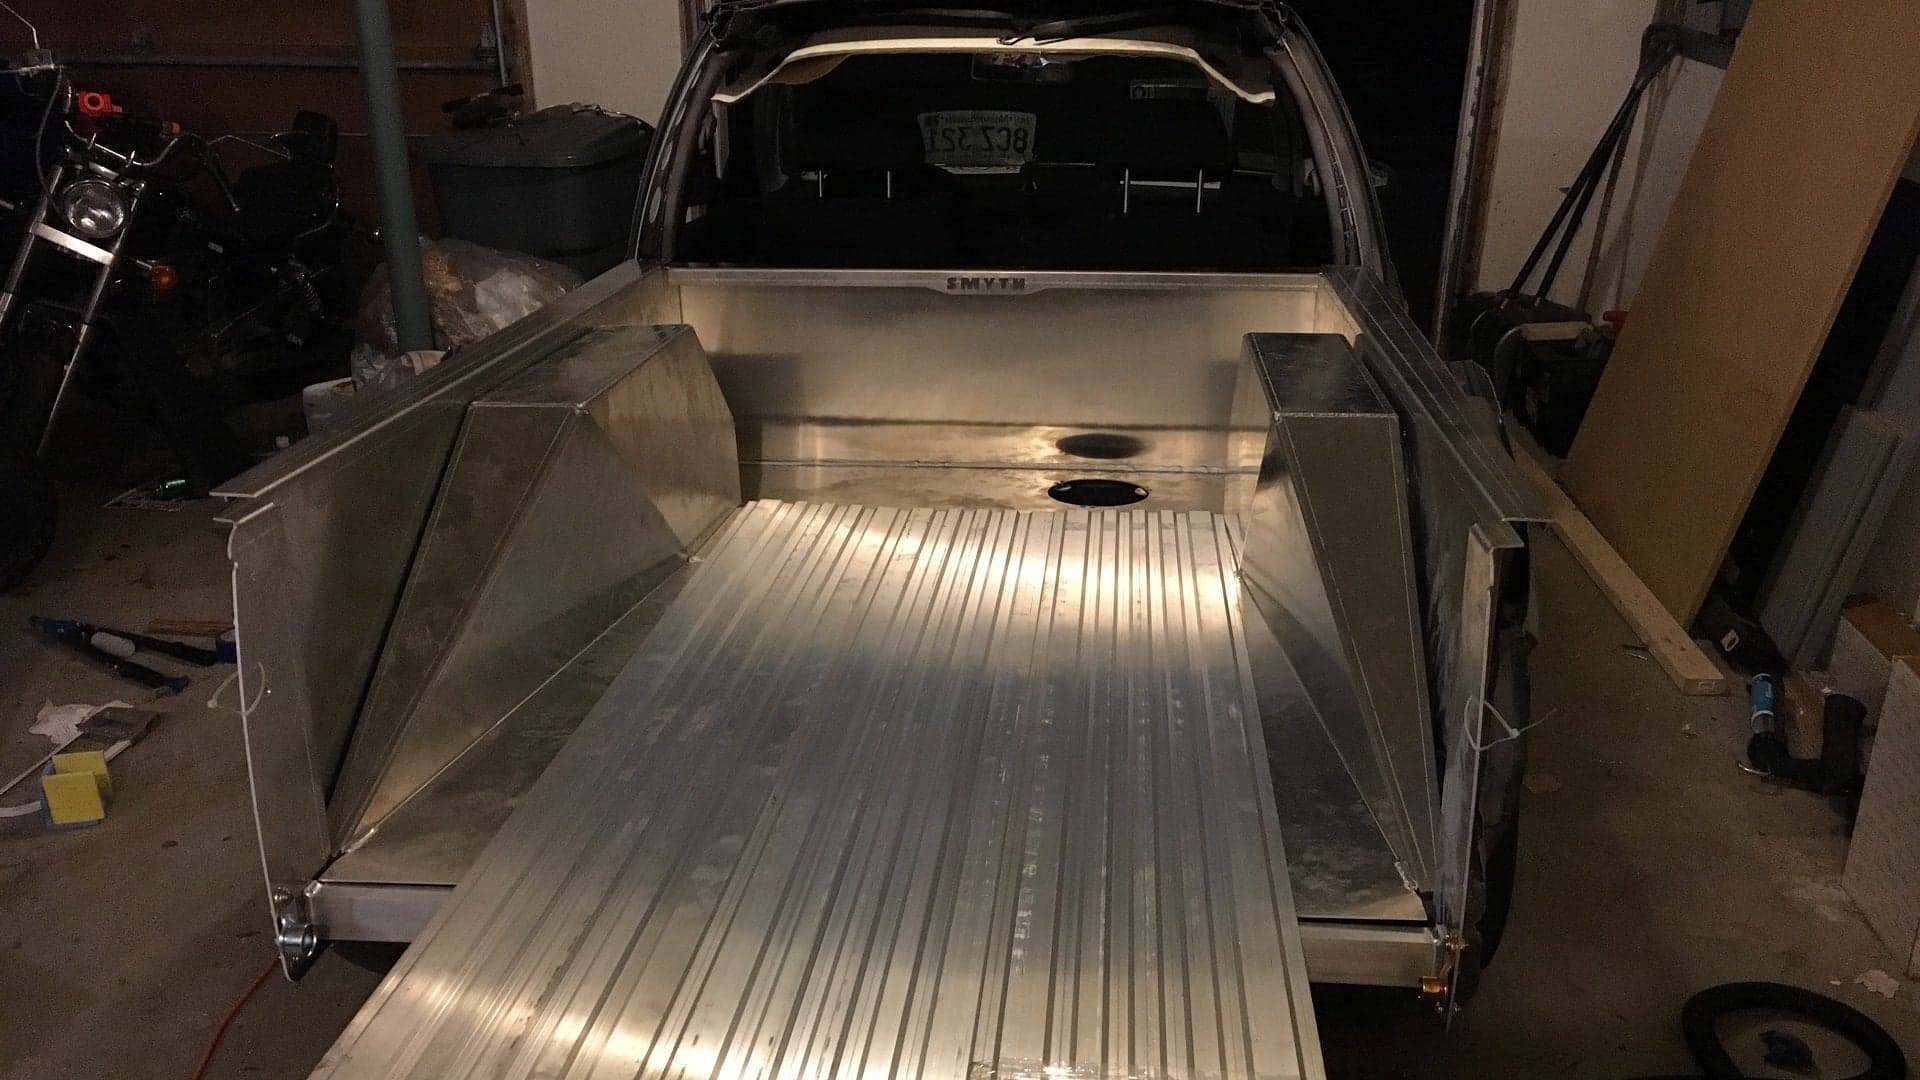 It’s Wonderful When a Garage-Built Kit Car Comes Together